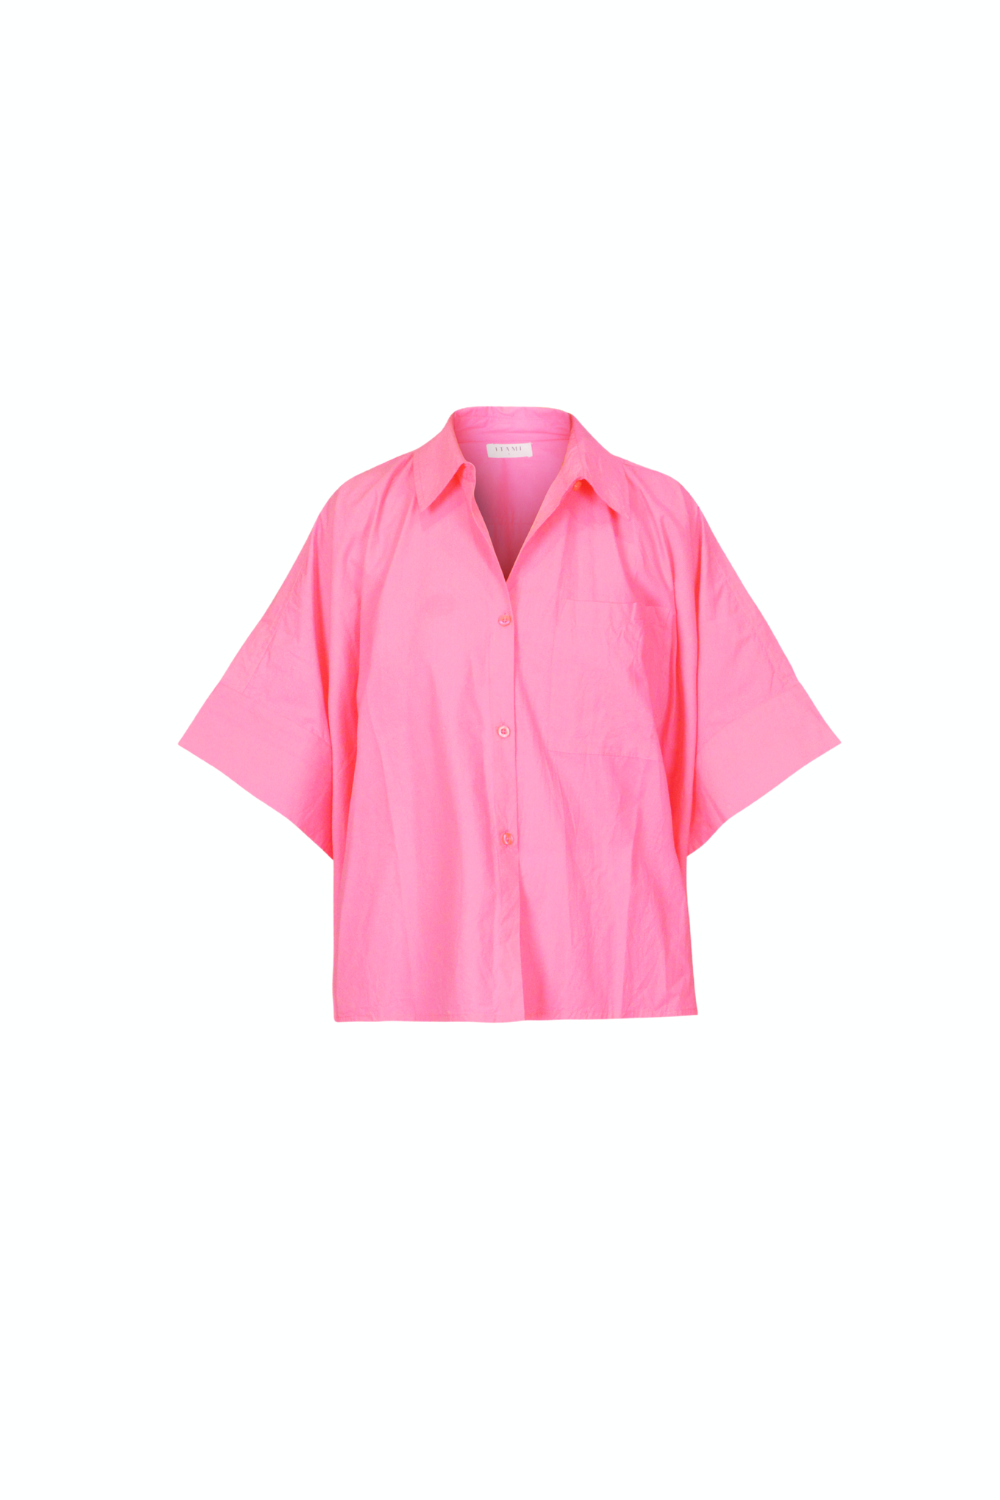 Itami Gigario Shirt Pink